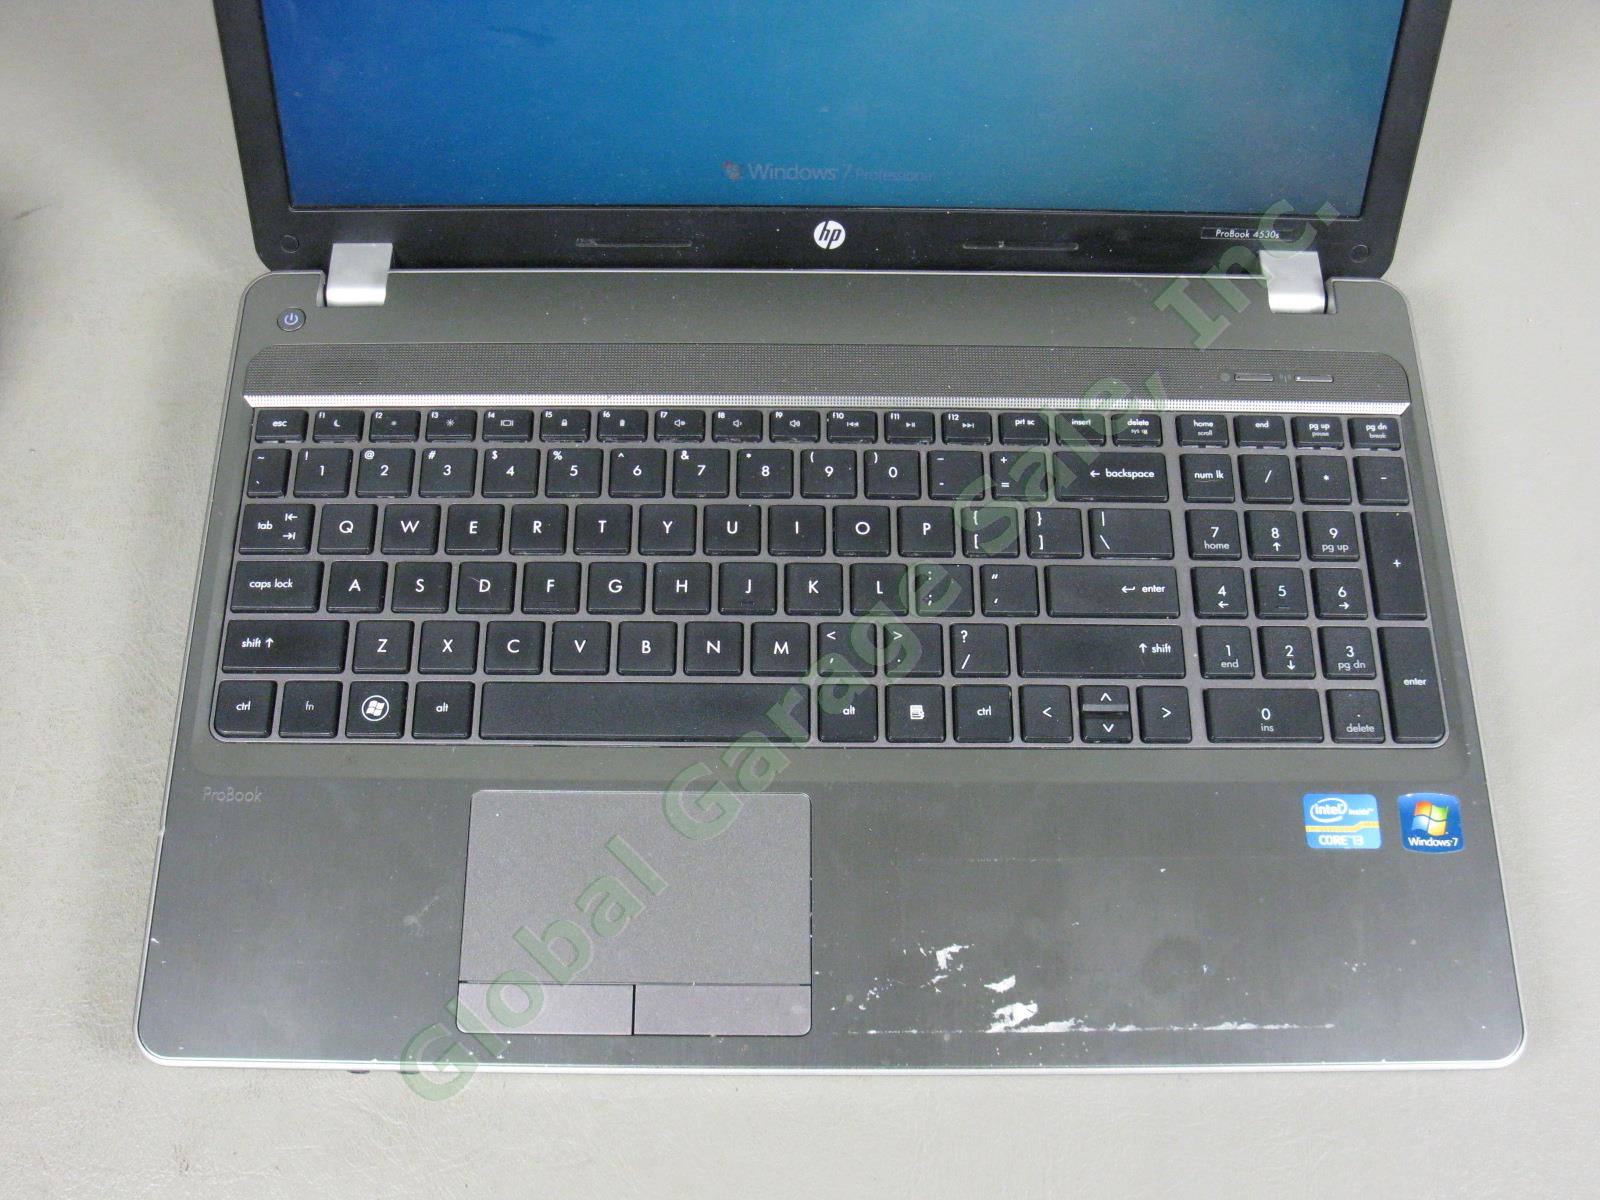 HP 4530s ProBook 15.6" Laptop Intel i3 2.30GHz 2GB 500GB Windows 7 Professional 3